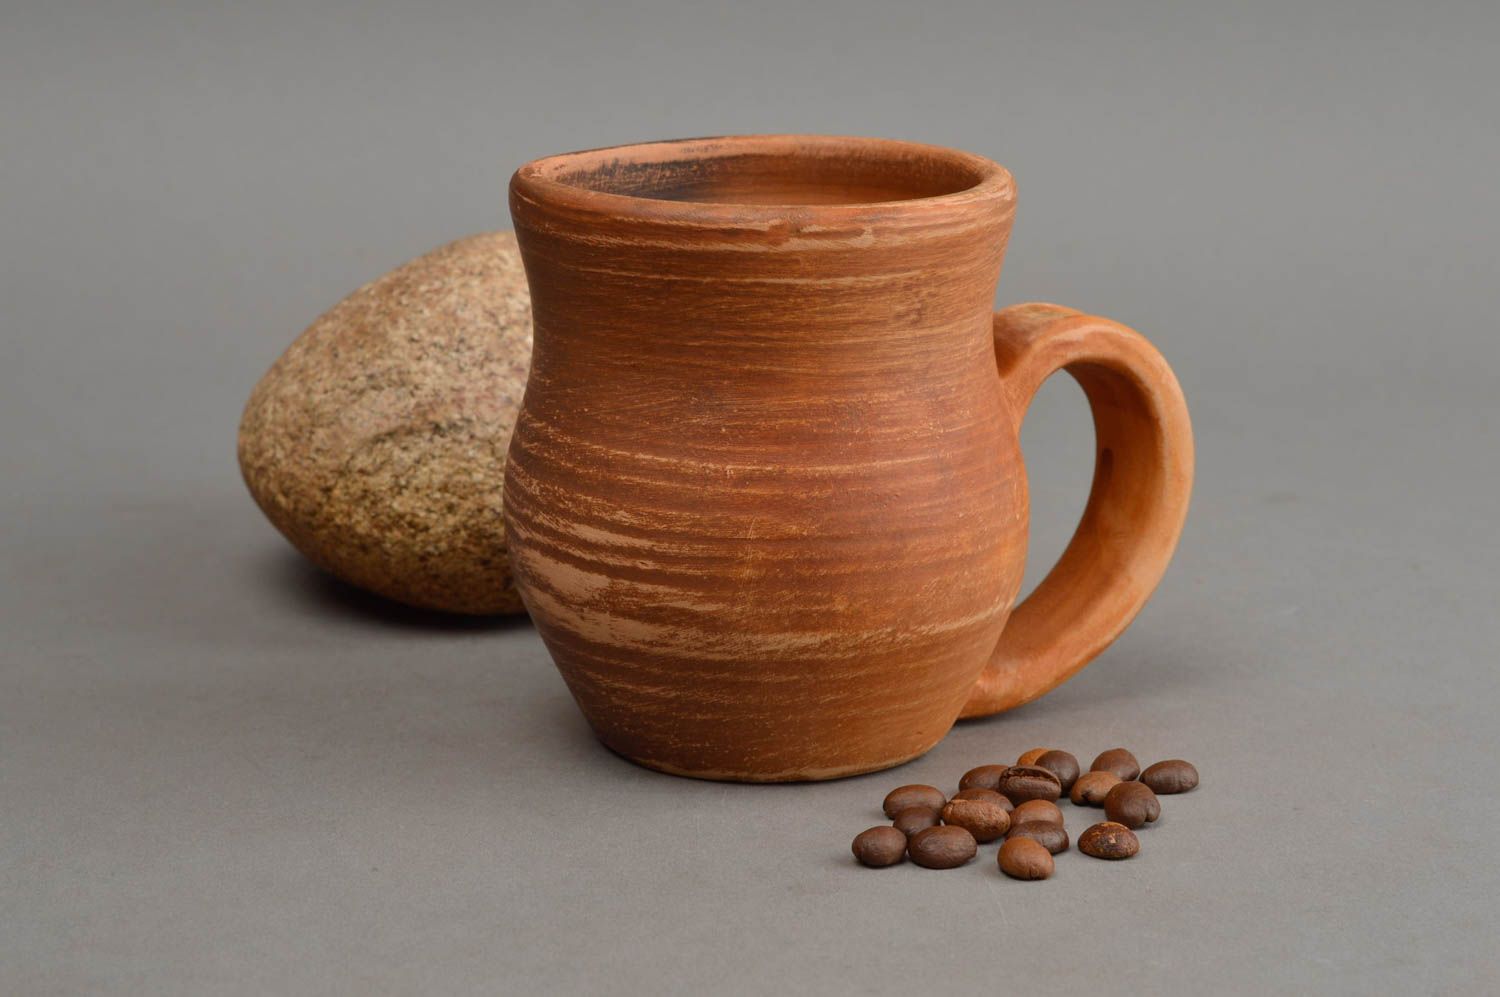  8 oz ceramic creamer pitcher mug in village style 0,5 lb photo 1